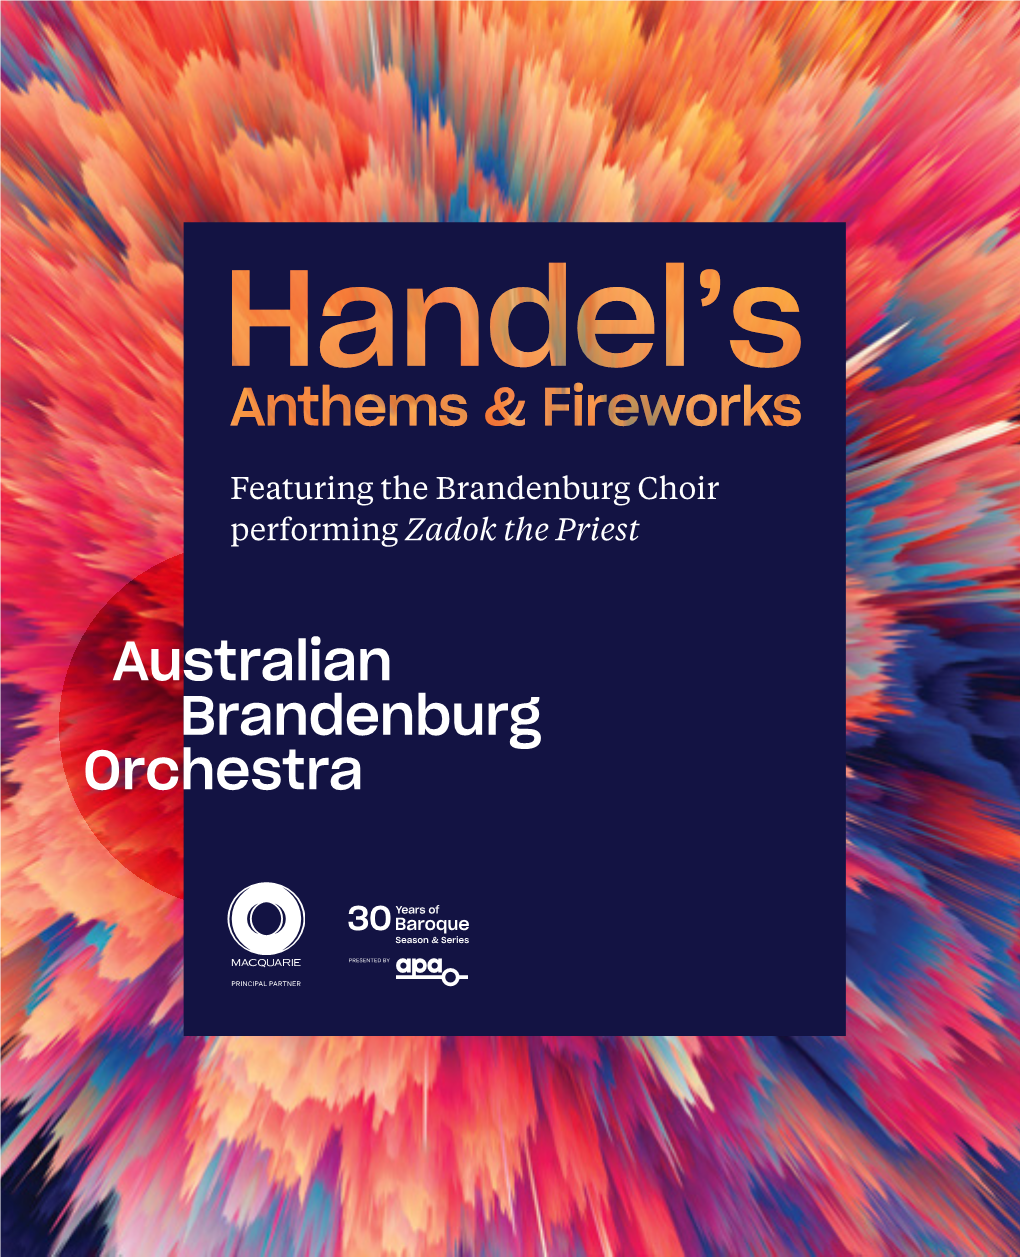 Handel's Anthems & Fireworks